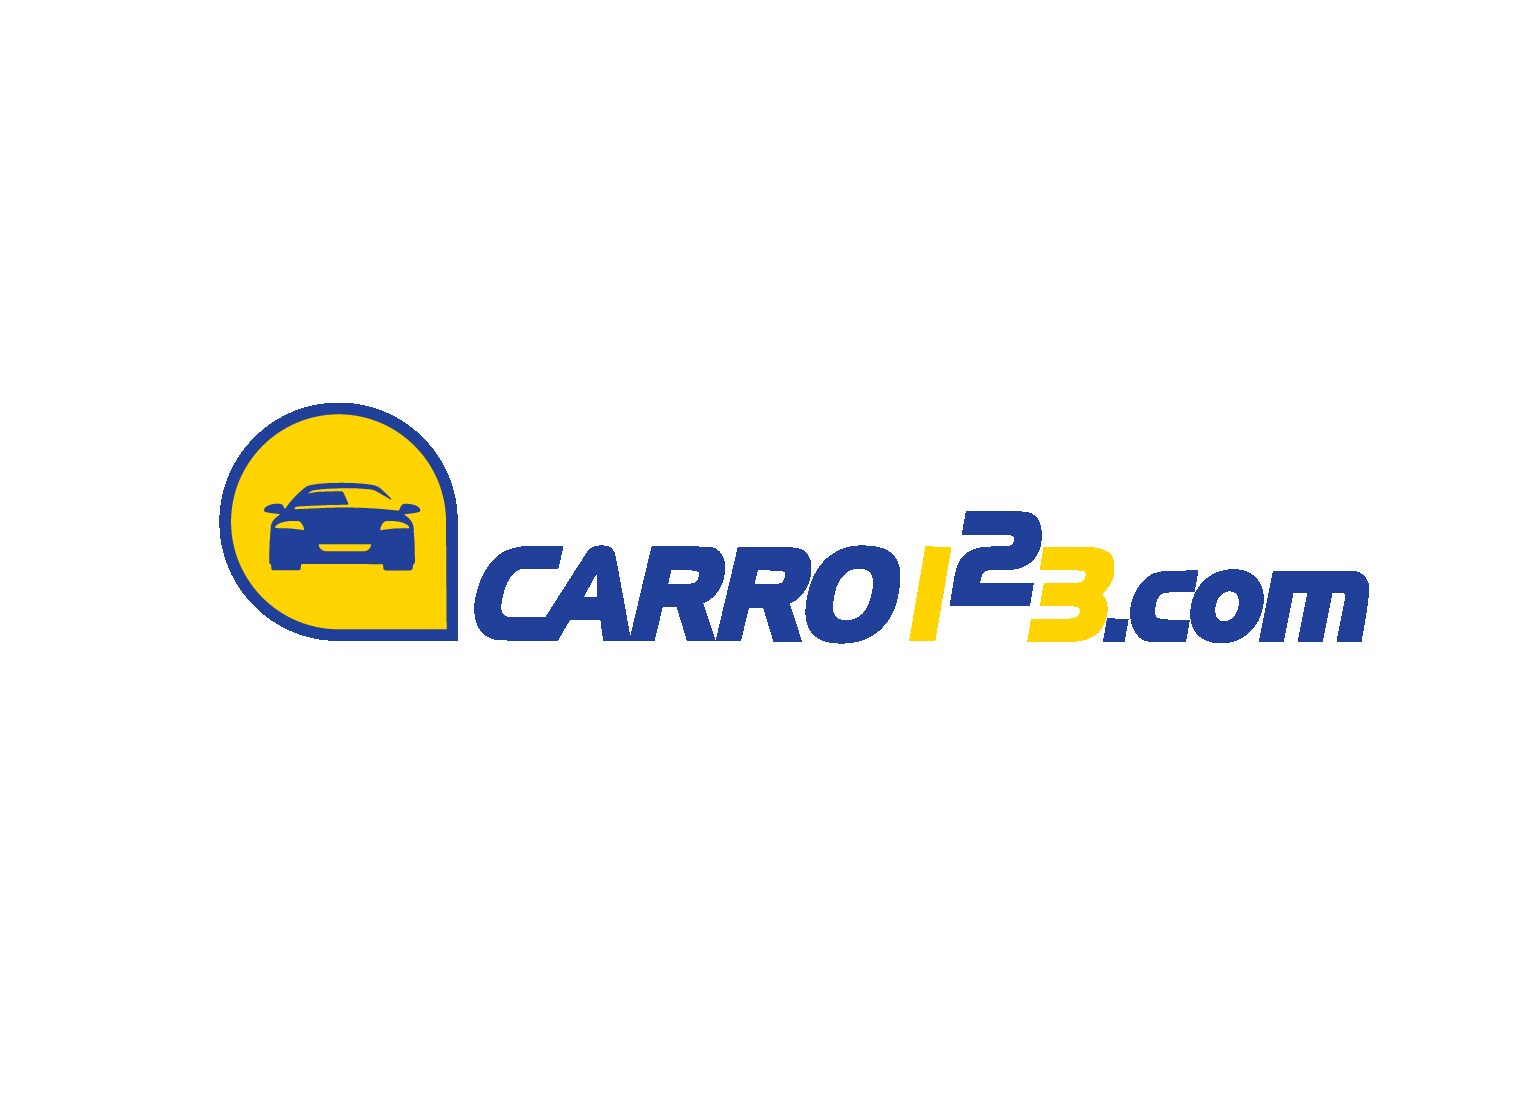 1 logo carro123 pdf 1